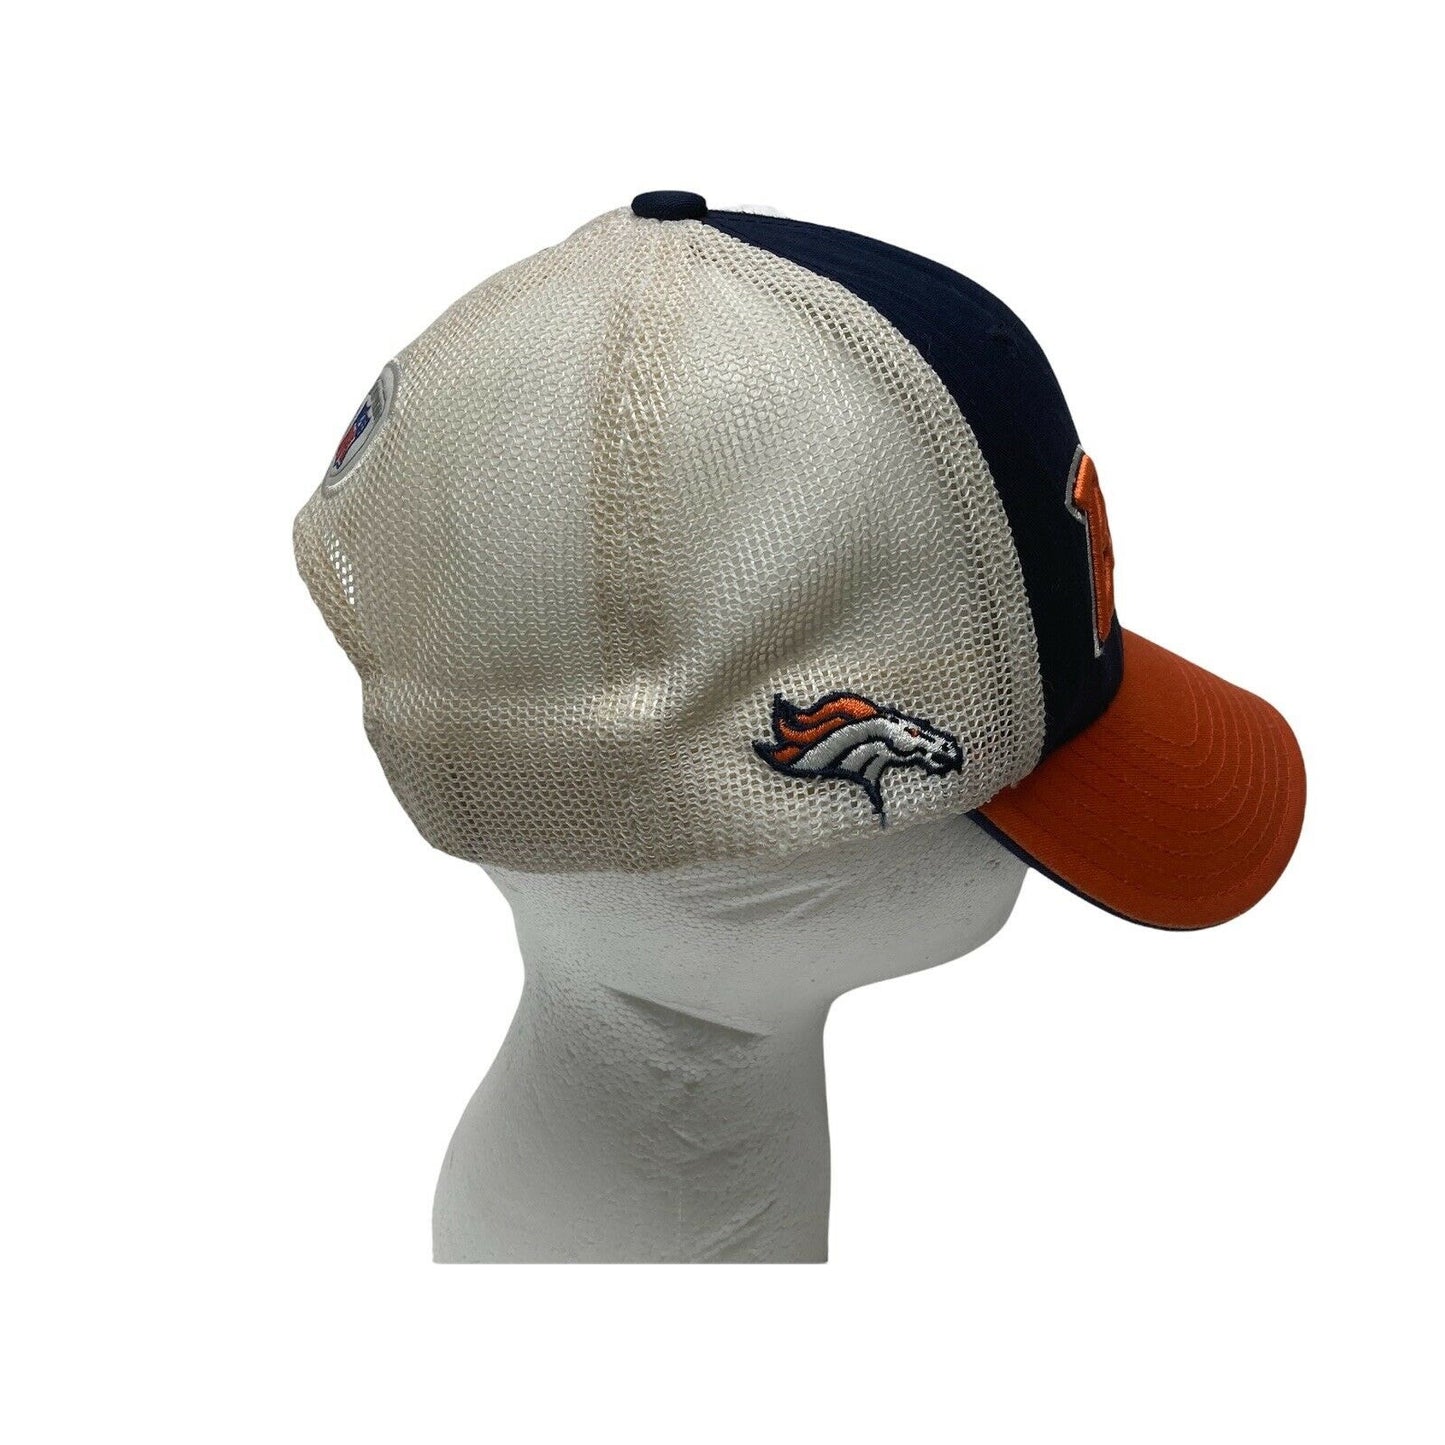 Reebok NFL Denver Broncos Mesh Snapback Vintage Hat Cap Football